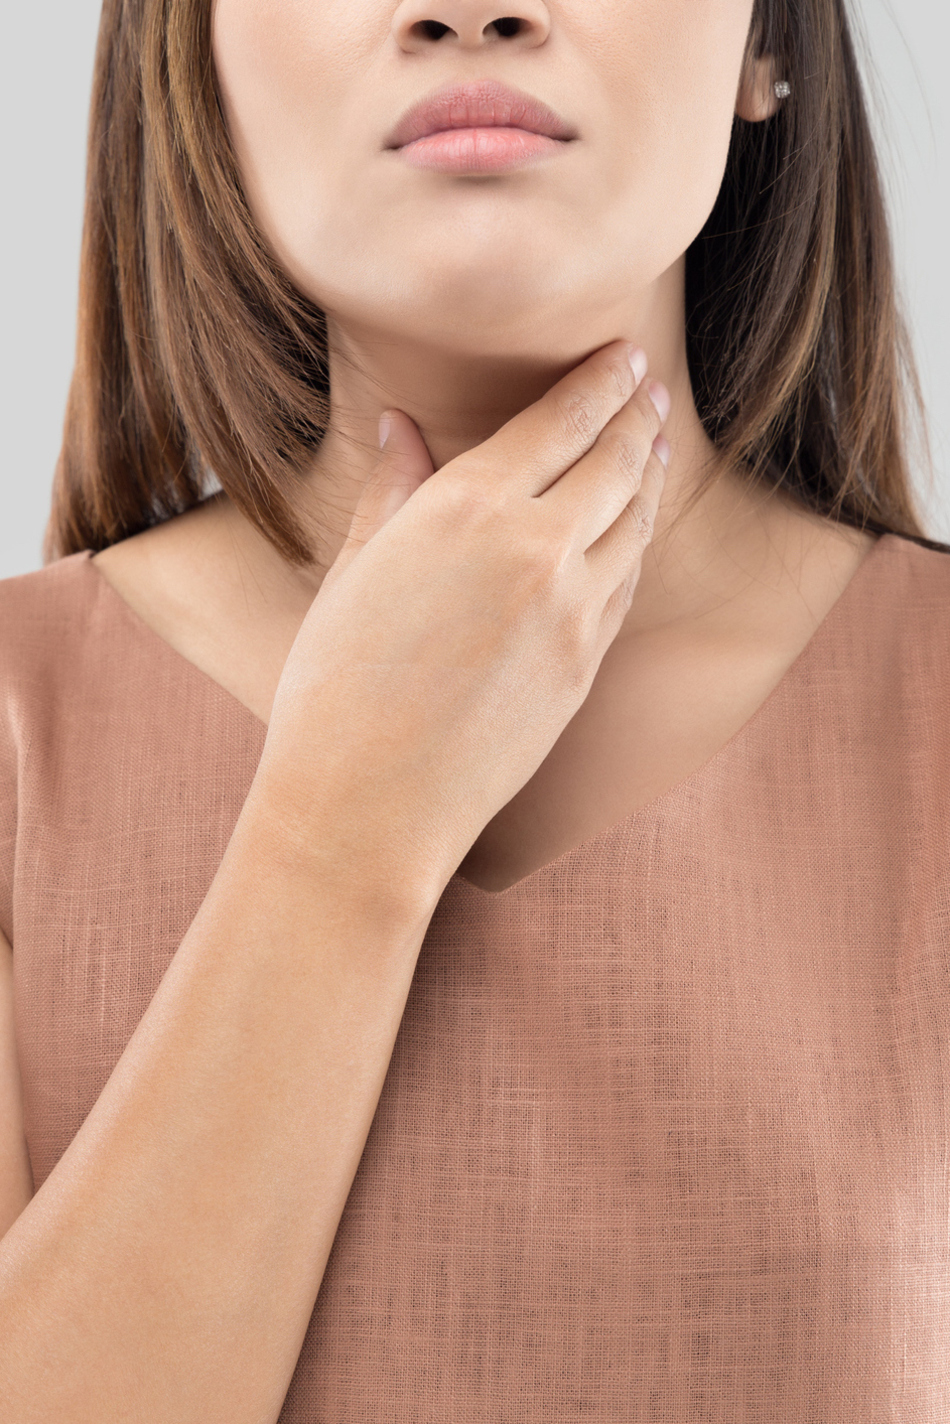 Thyroid Cancer in Women